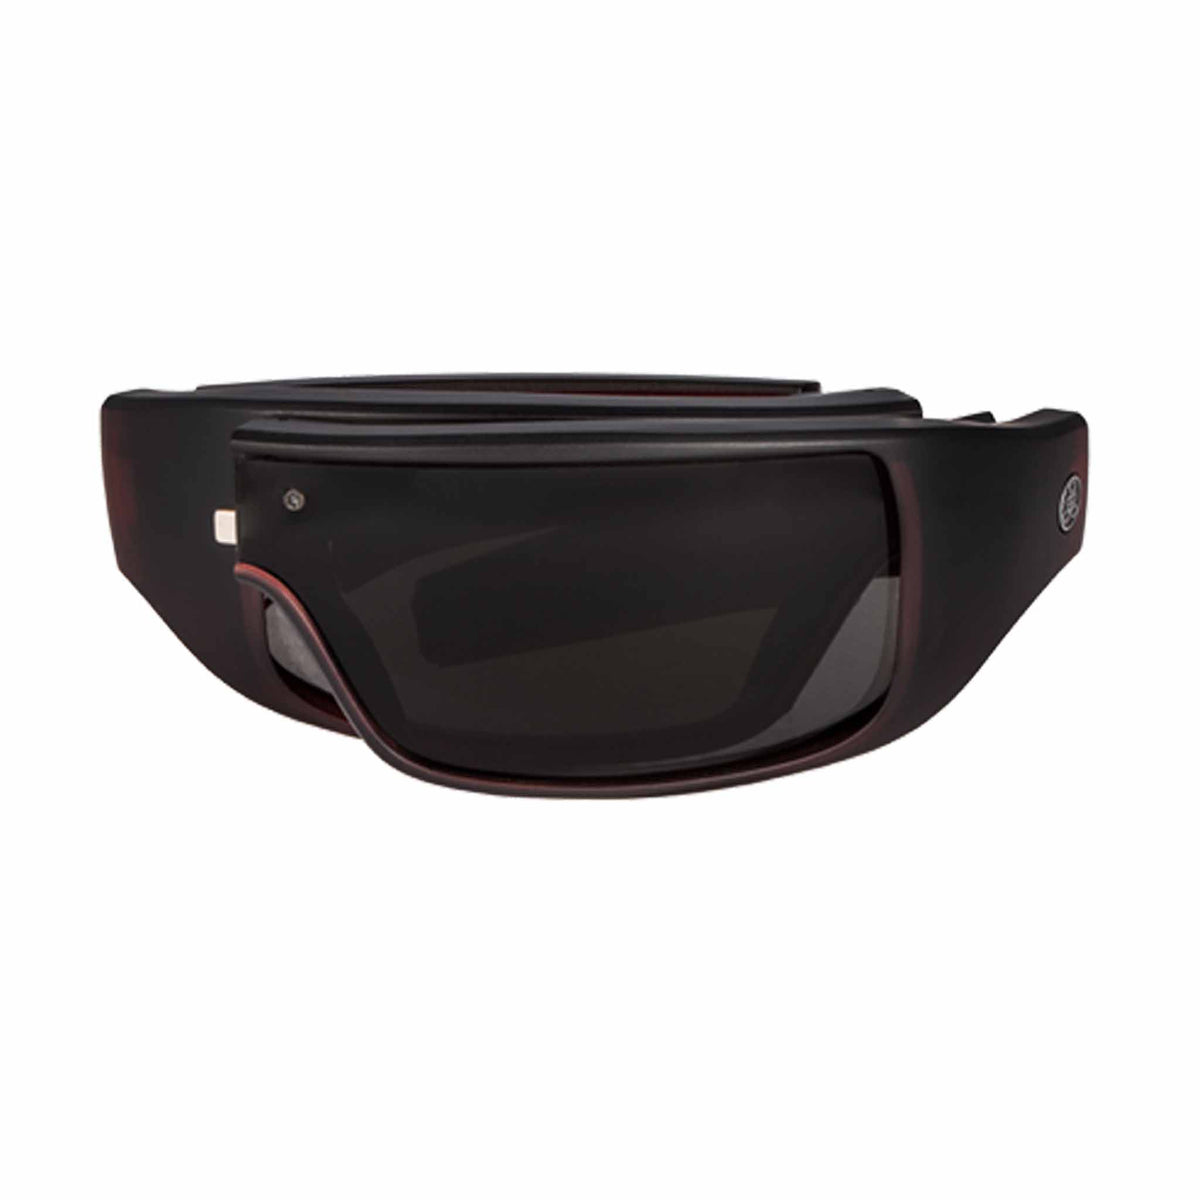 Popticals, Premium Compact Sunglasses, PopGear, 030050-LEGP, Polarized Sunglasses, Gloss Wine/Black Crystal Frame, Gray Lenses, Compact View